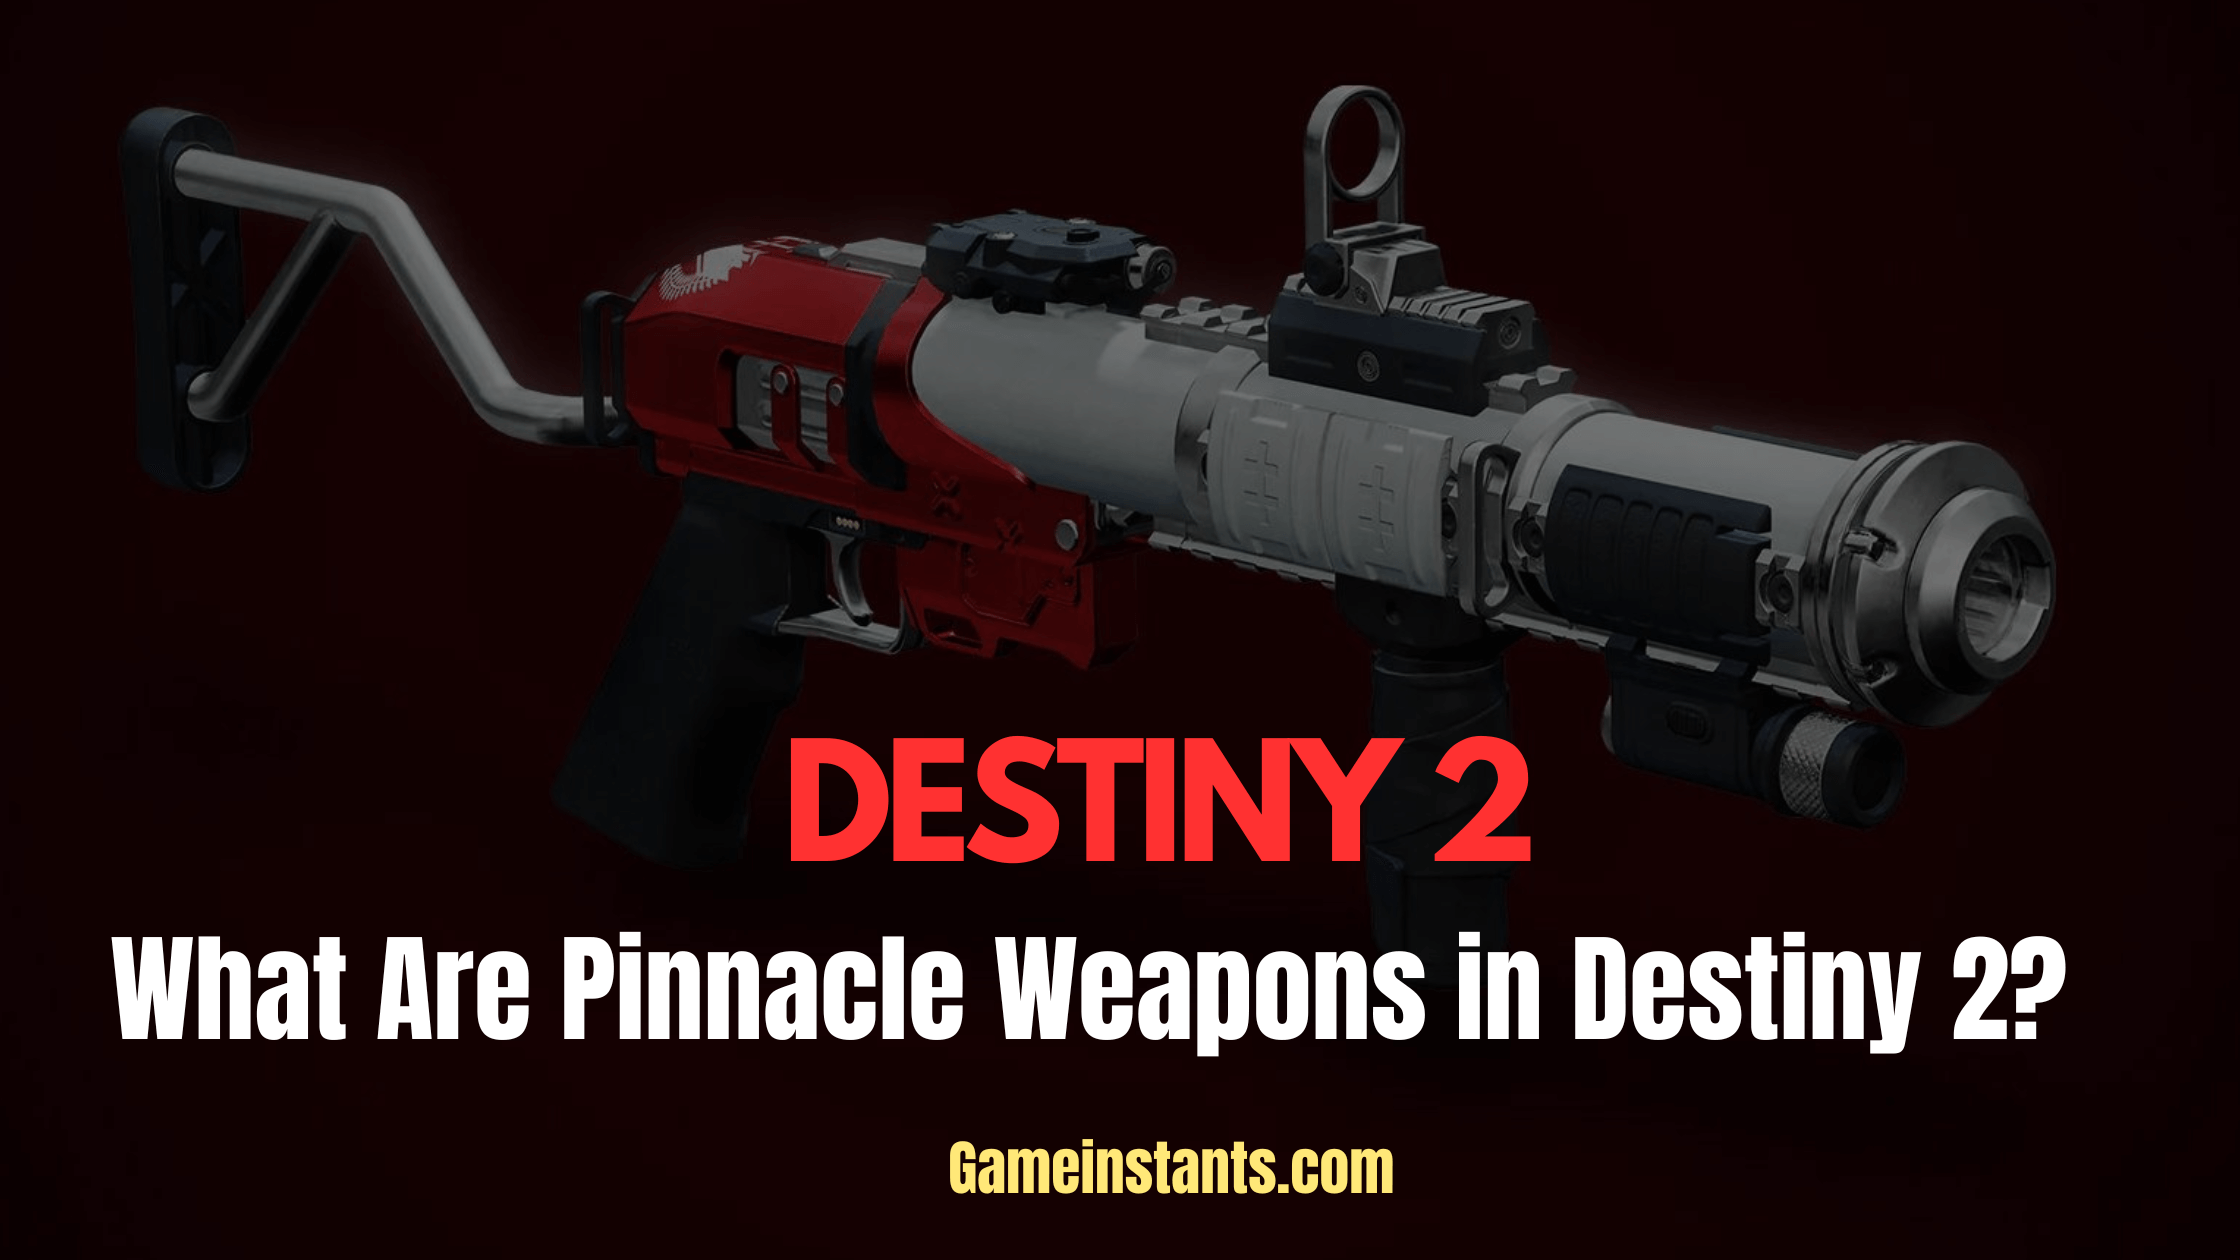 Pinnacle Weapons Destiny 2